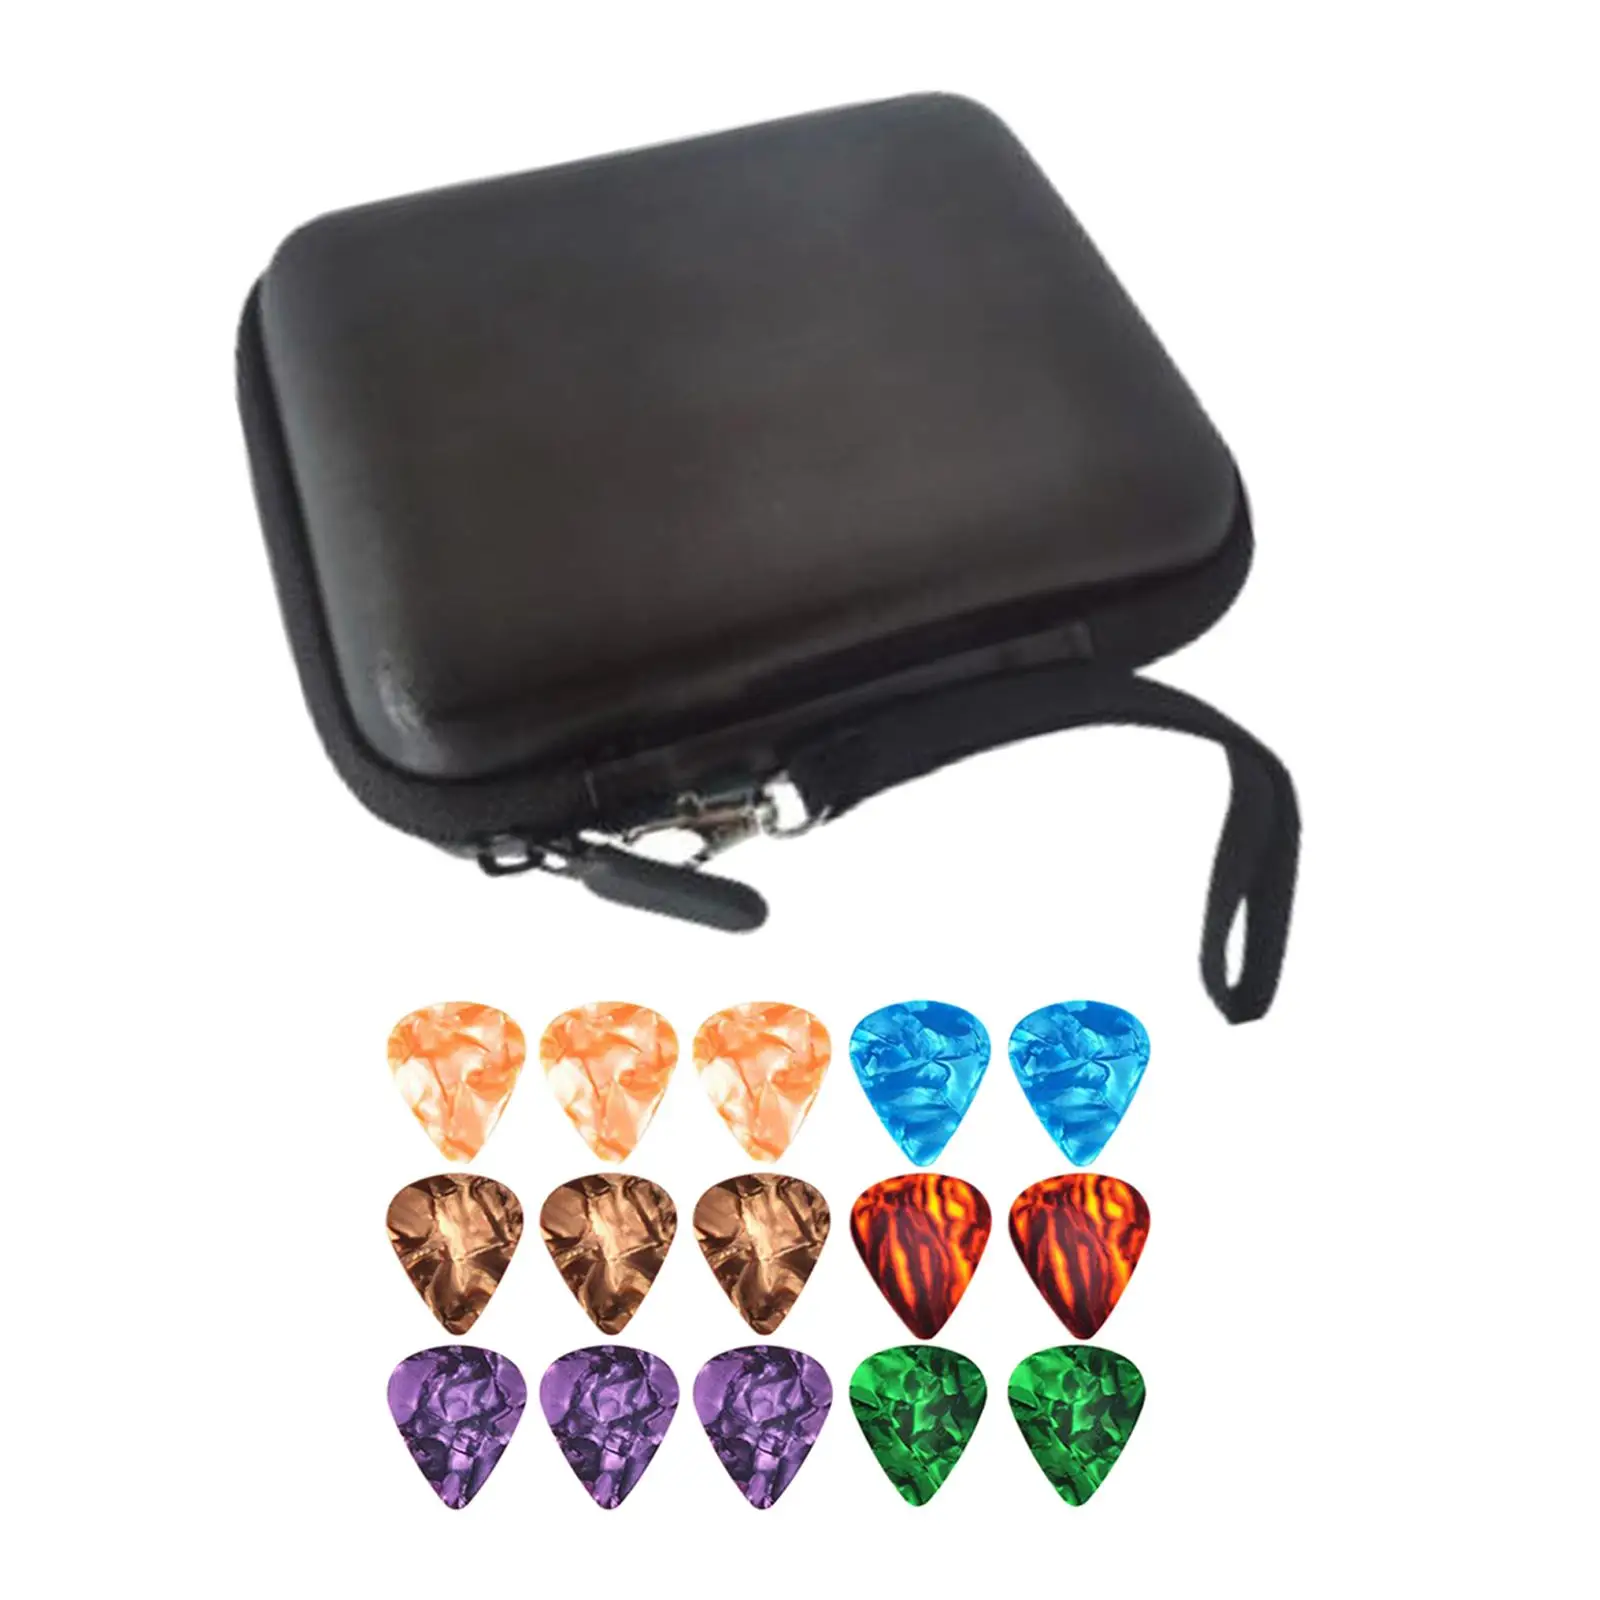 Portable Guitar Picks Holder Case Large Capacity Plectrums Bag for Acoustic Strings